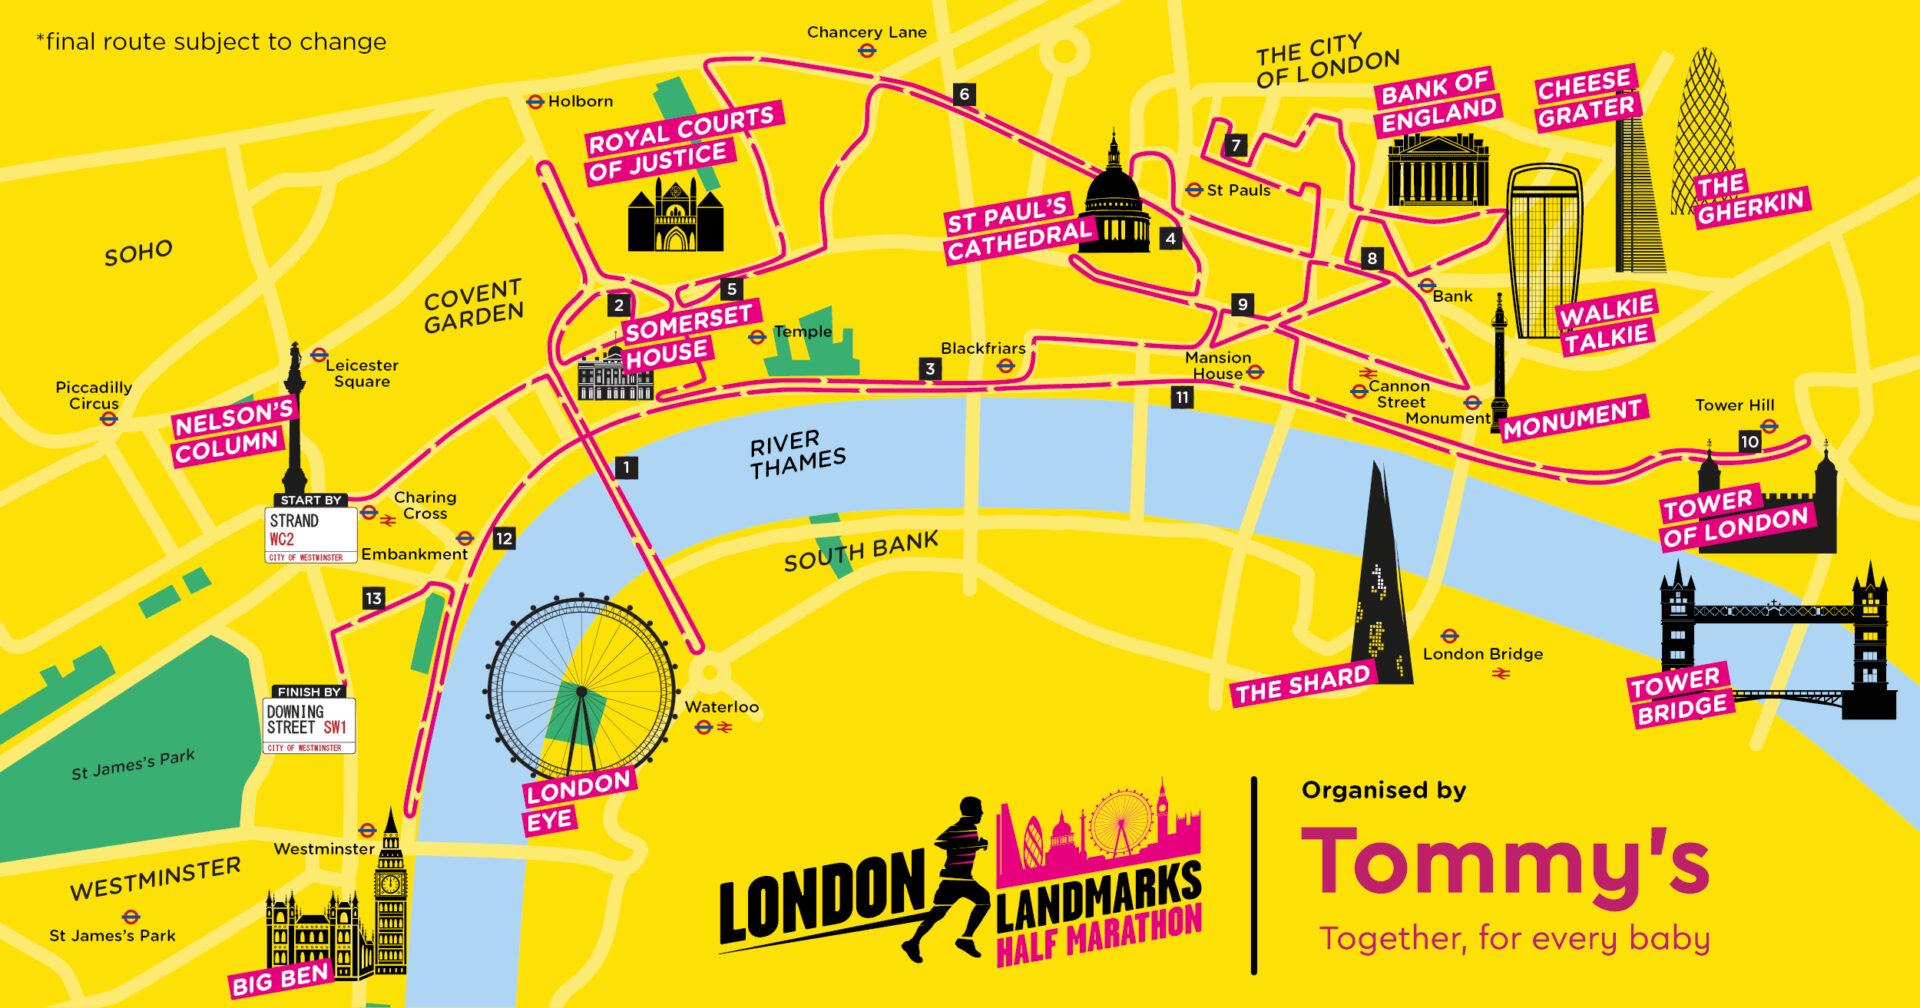 The London Landmarks Half Marathon Active UK